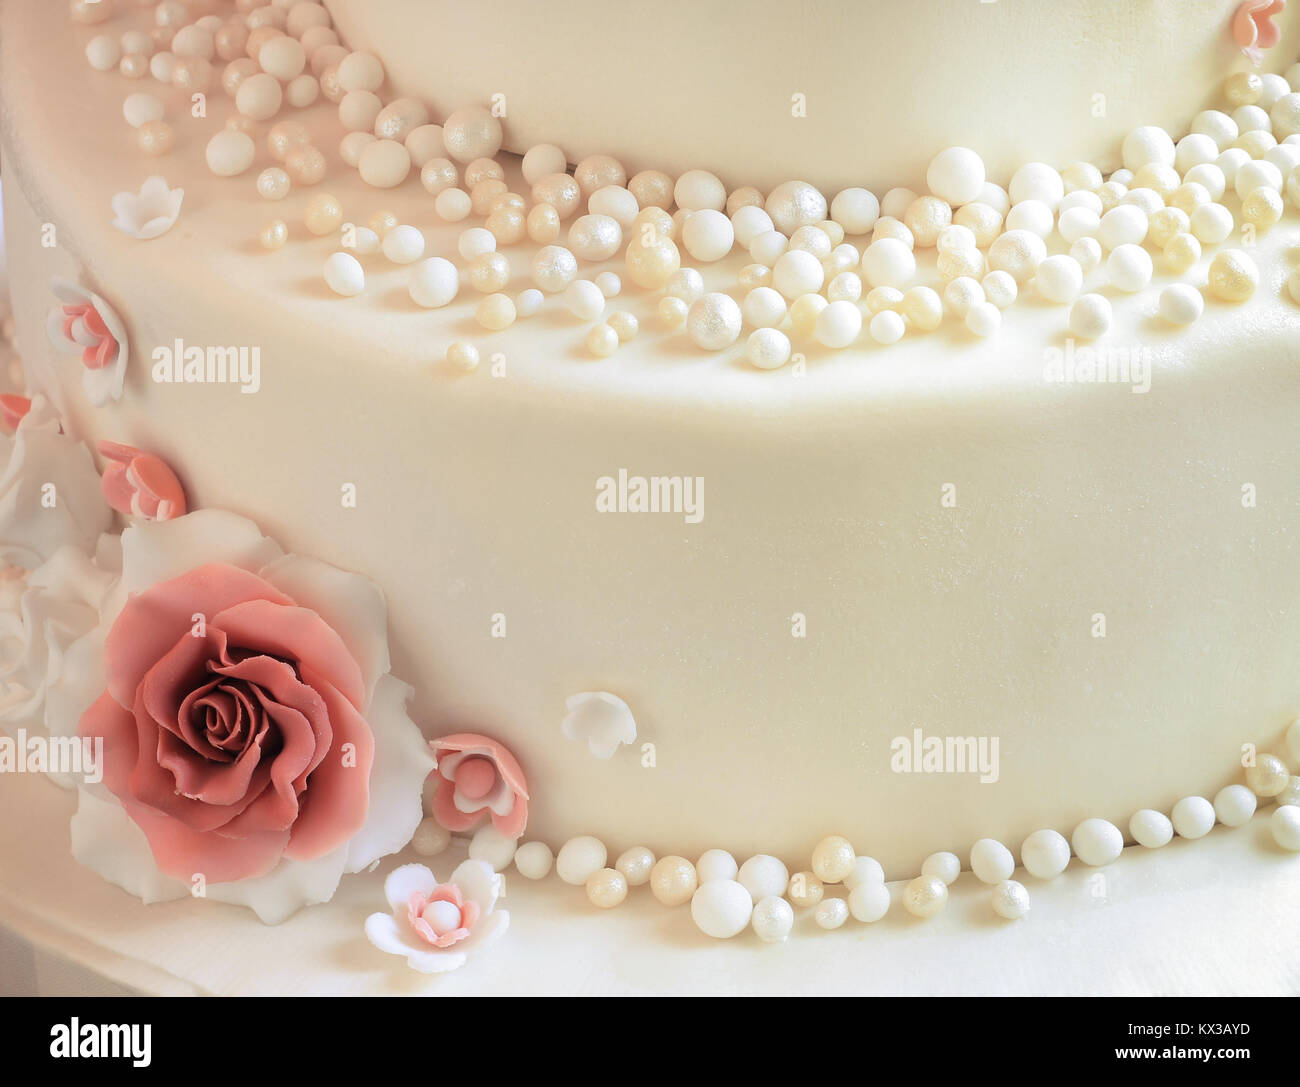 Rose di zucchero con perle perle di zucchero sulla torta closeup Foto stock  - Alamy